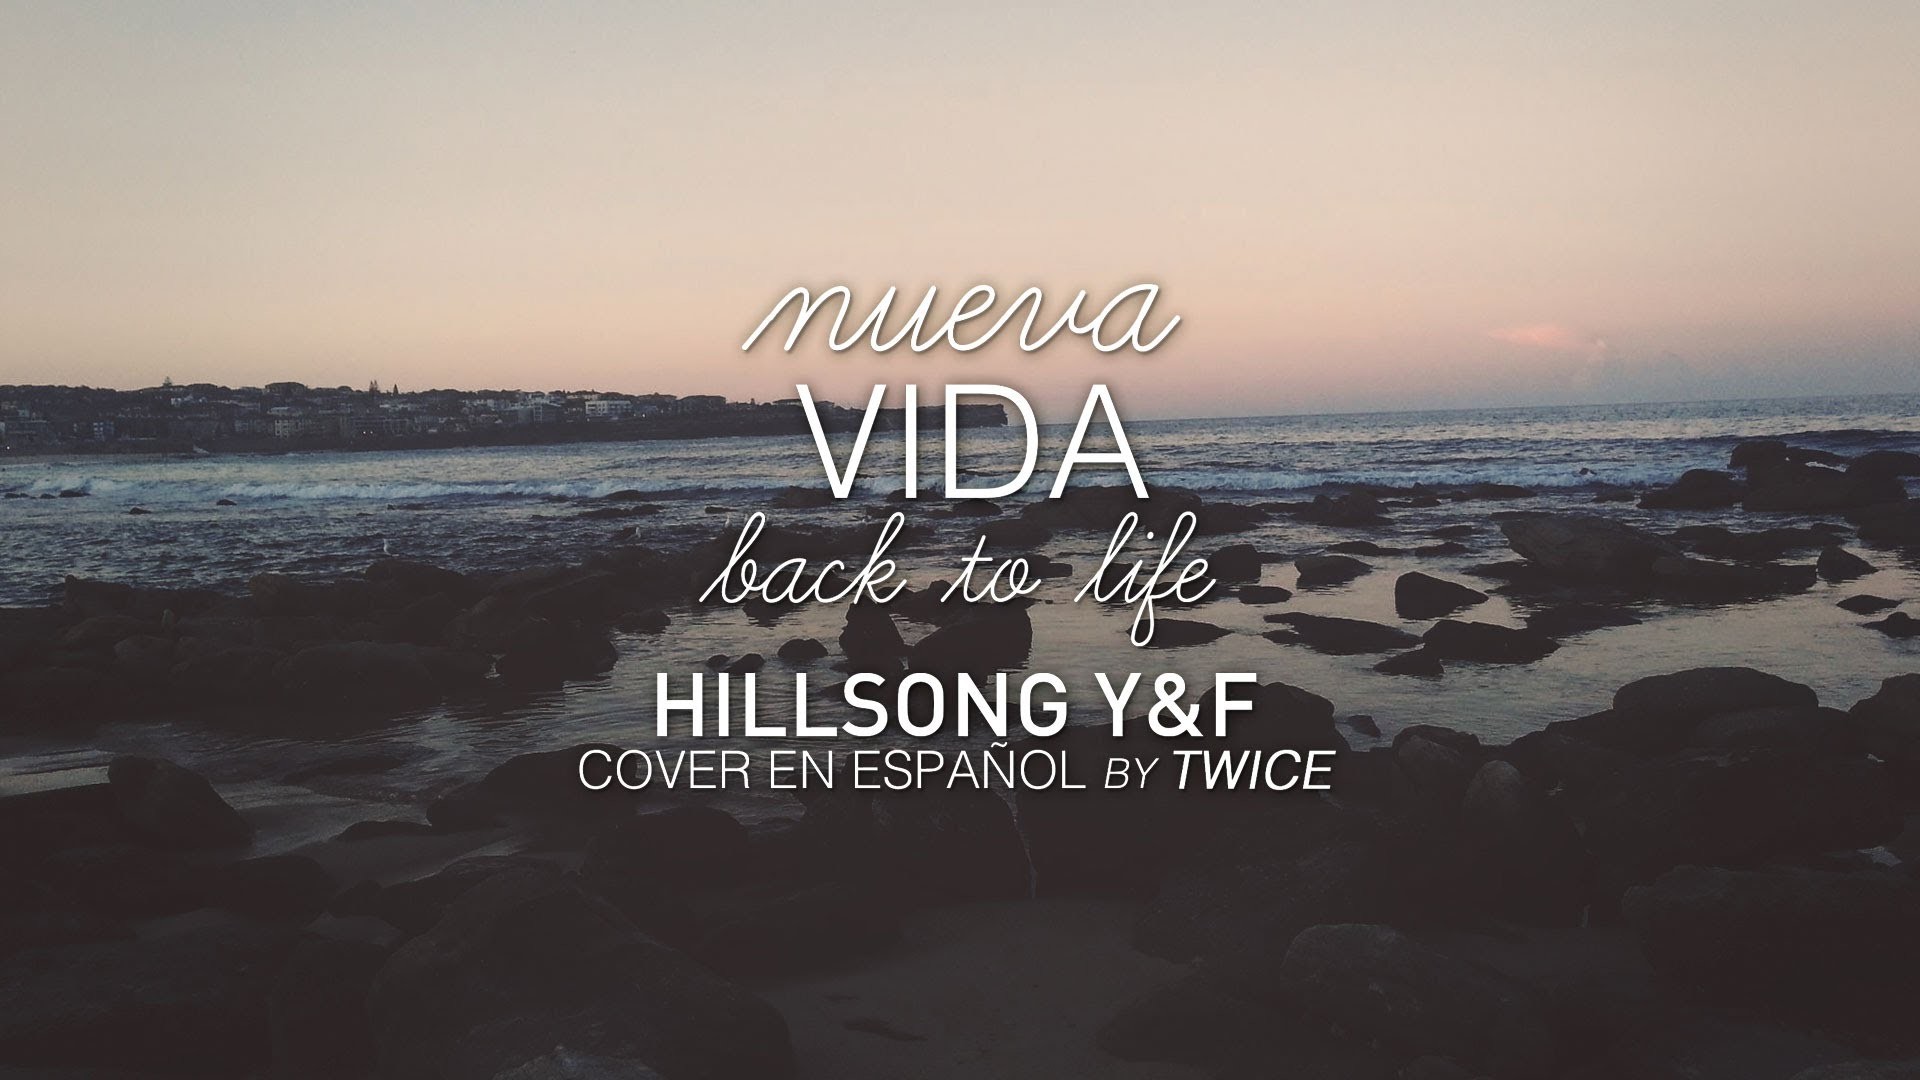 1920x1080 Hillsong Young & Free - Nueva Vida (Back to life) (con letra) (cover en  espaÃ±ol by TWICE) - YouTube